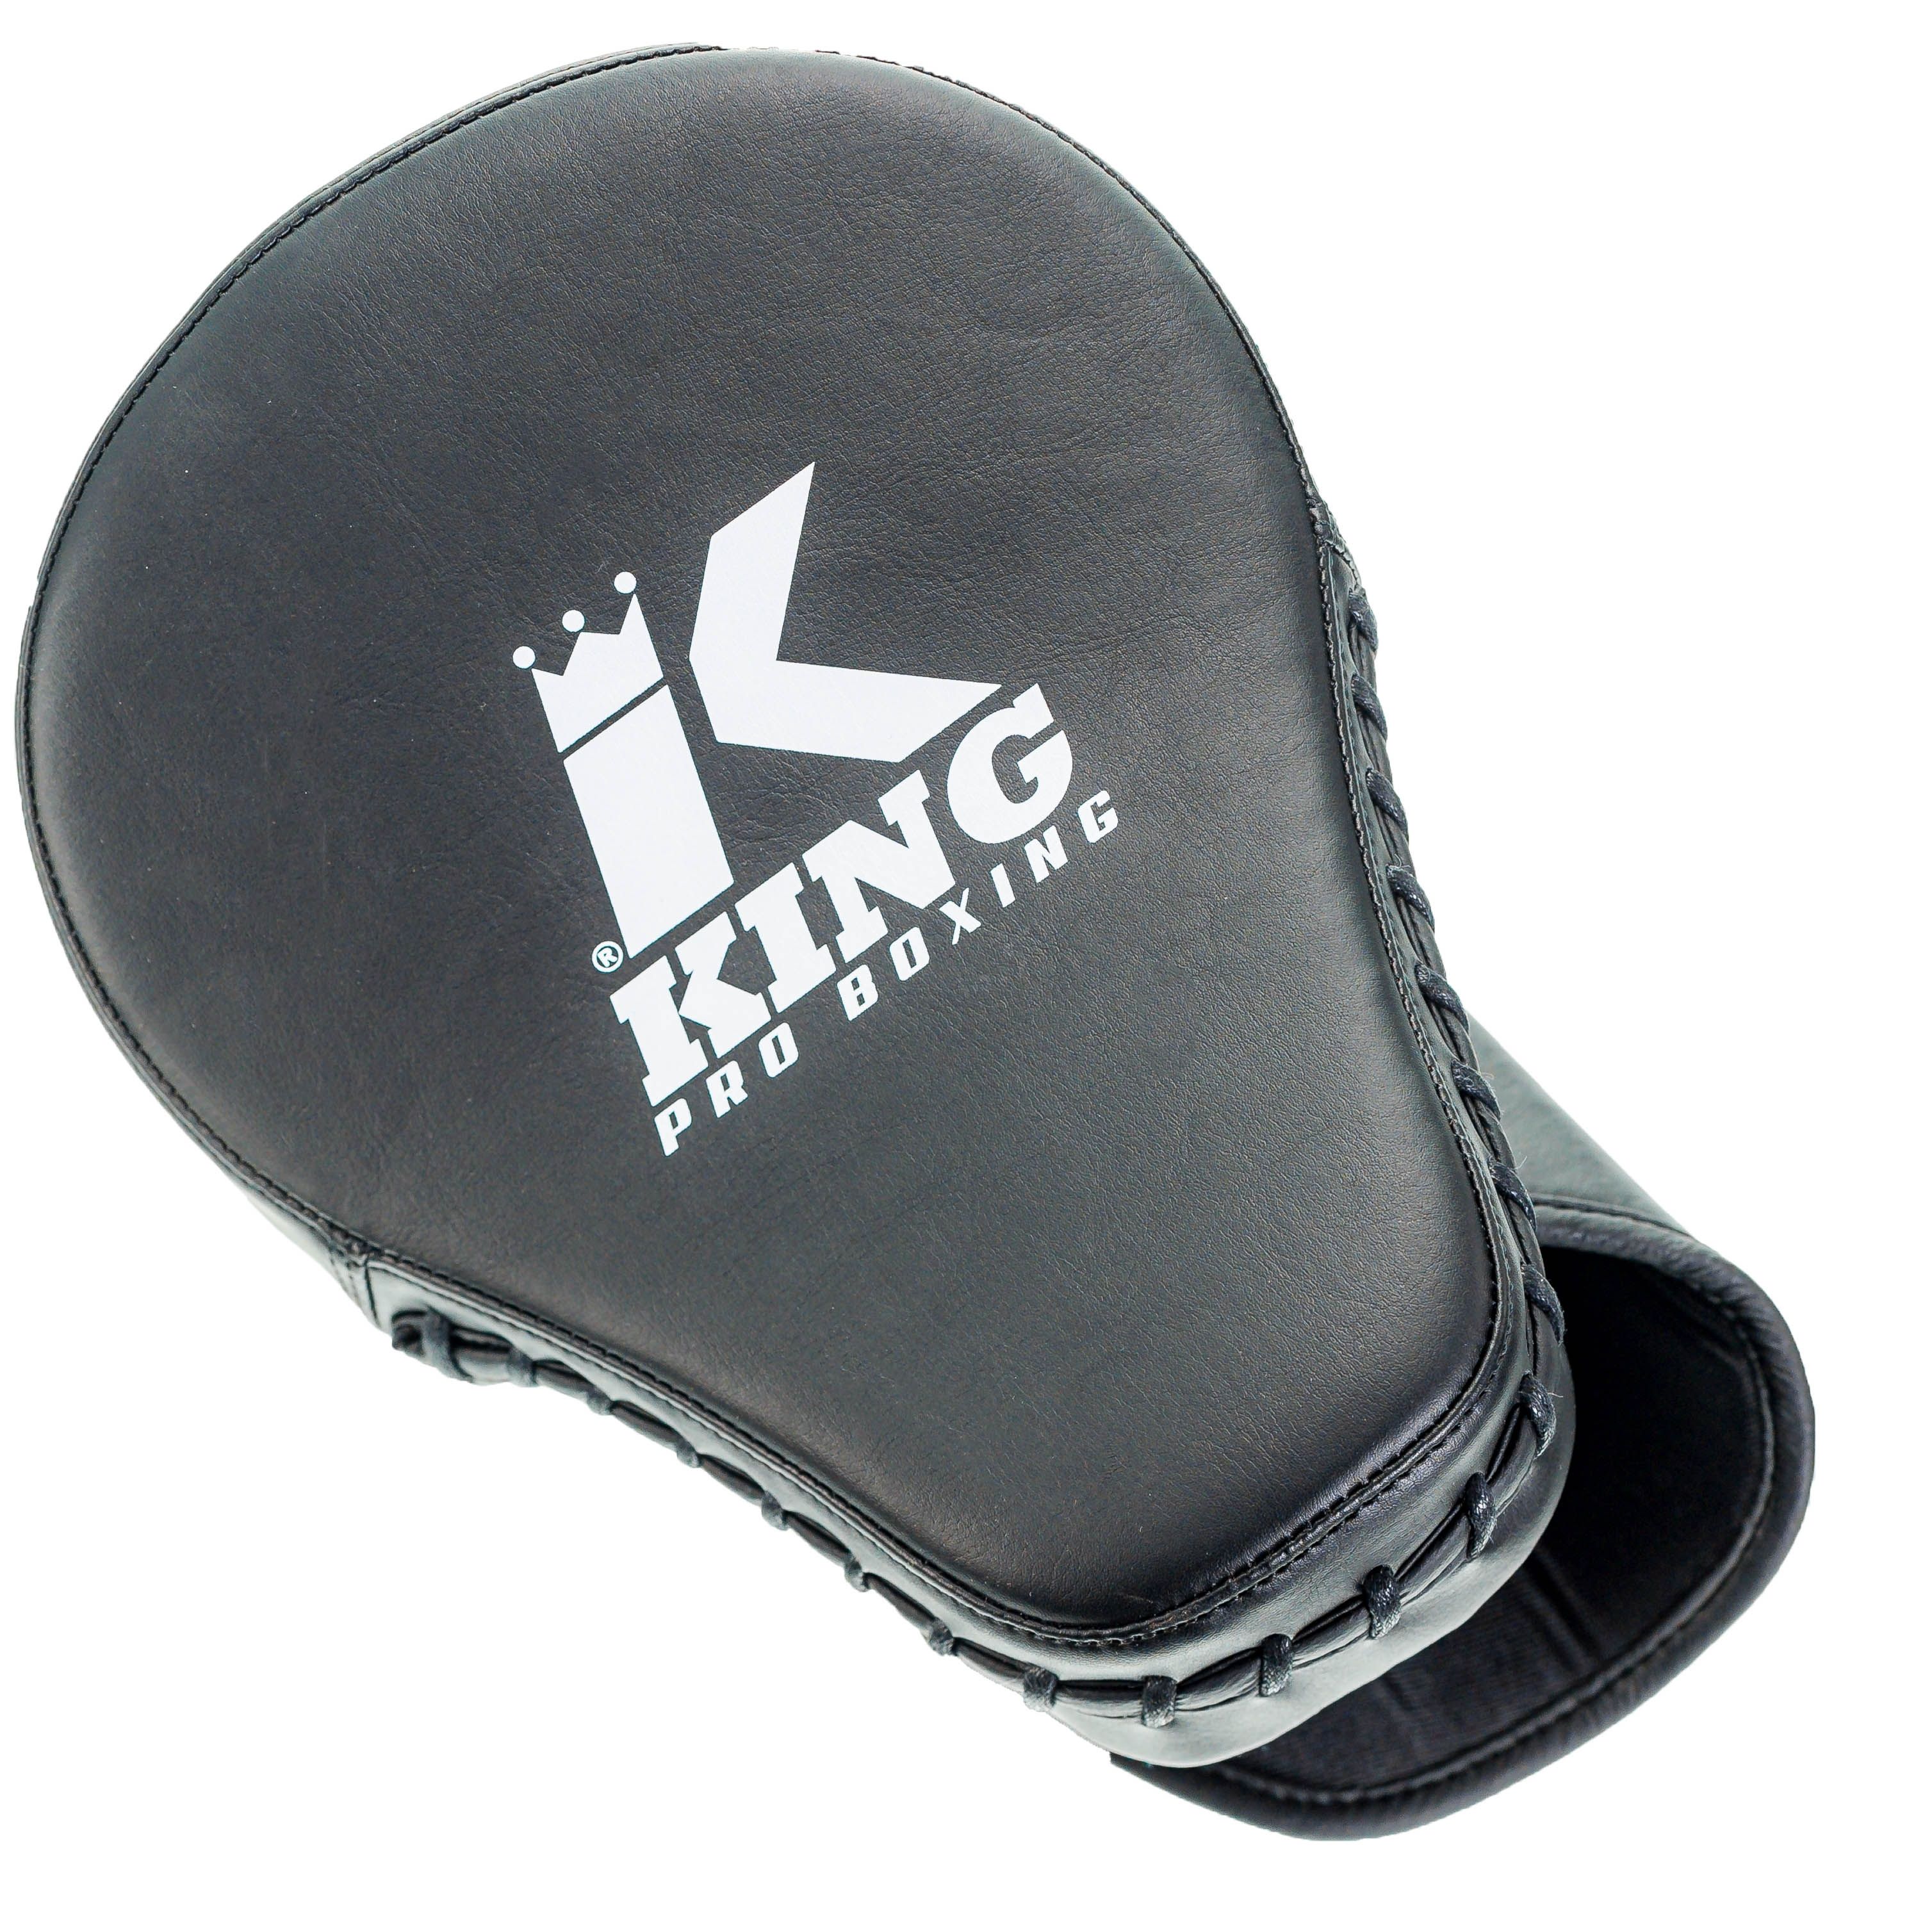 King Pro Boxing- FM - REVO - ONE SIZE- handpads